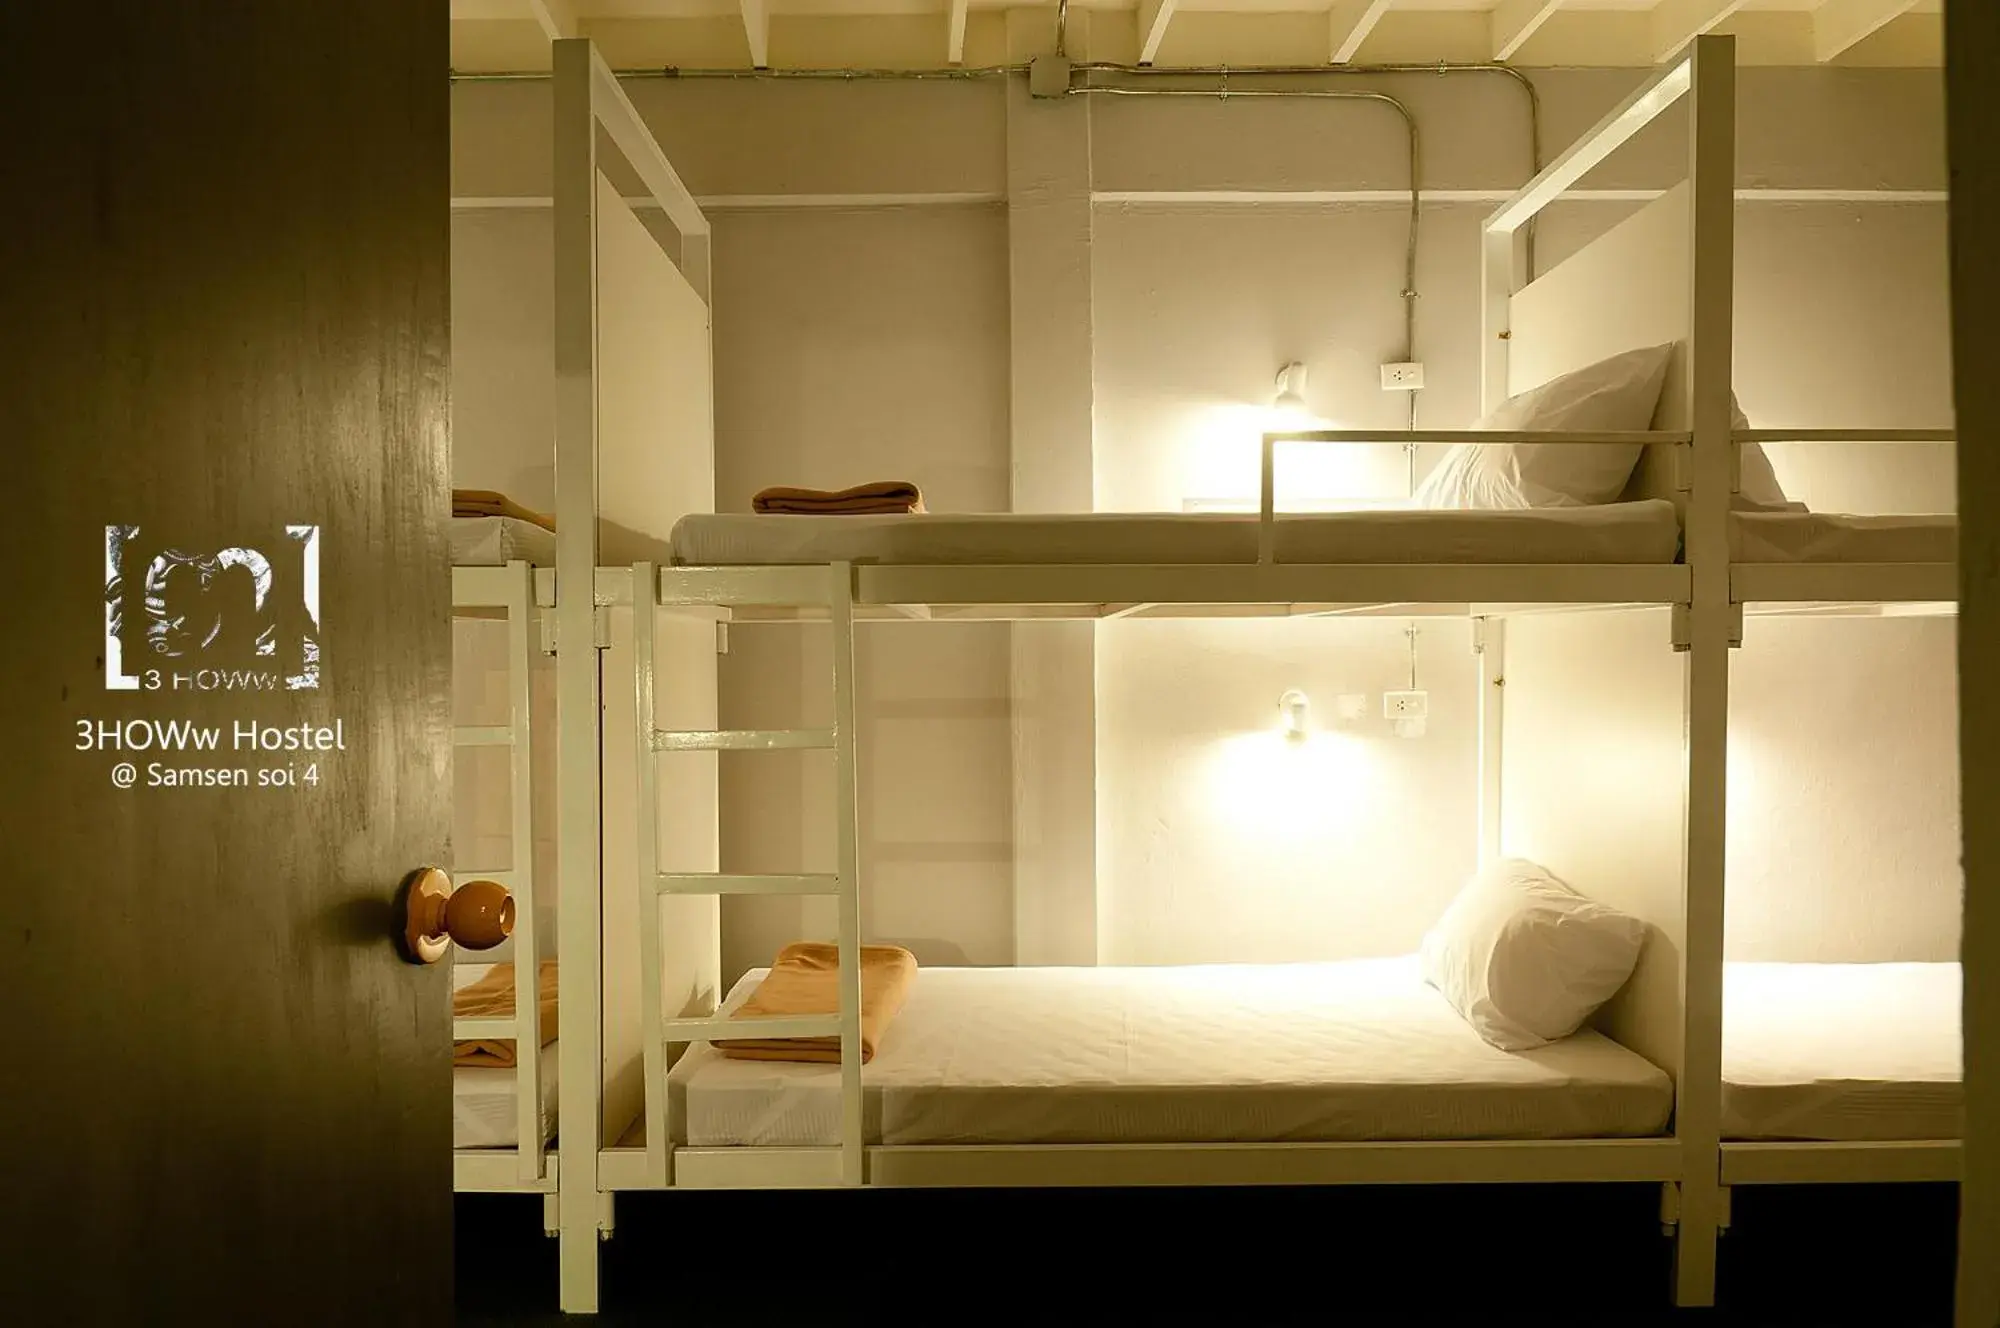 bunk bed in 3 Howw Hostel at Khaosan